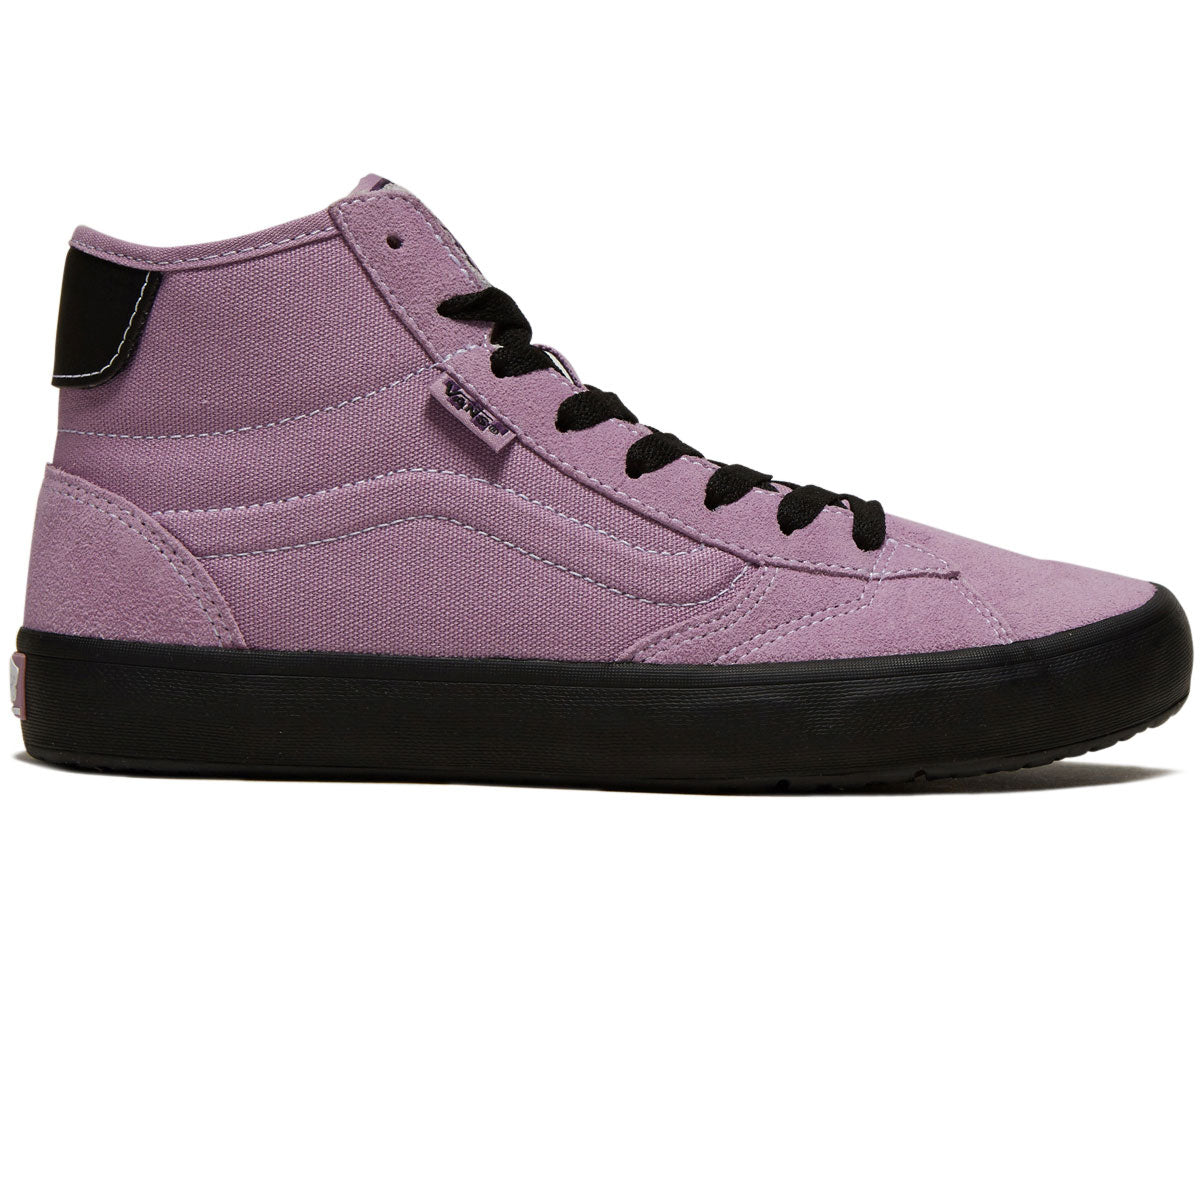 Vans The Lizzie Shoes - Lavender Fog/Black image 1